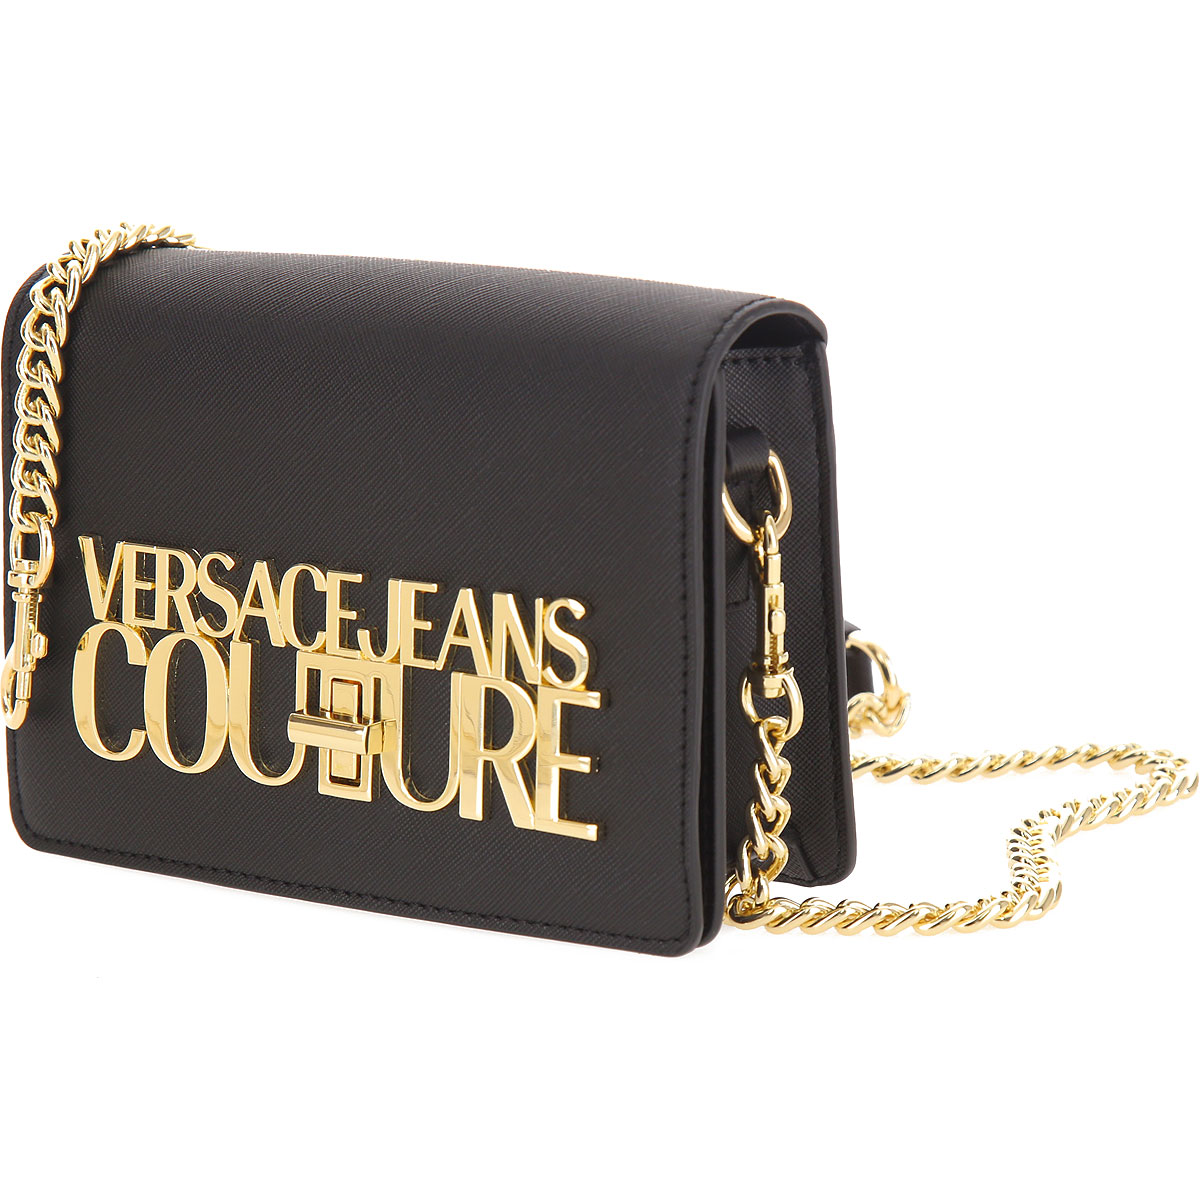 Versace Jeans Couture - Wallet Bibloo.com